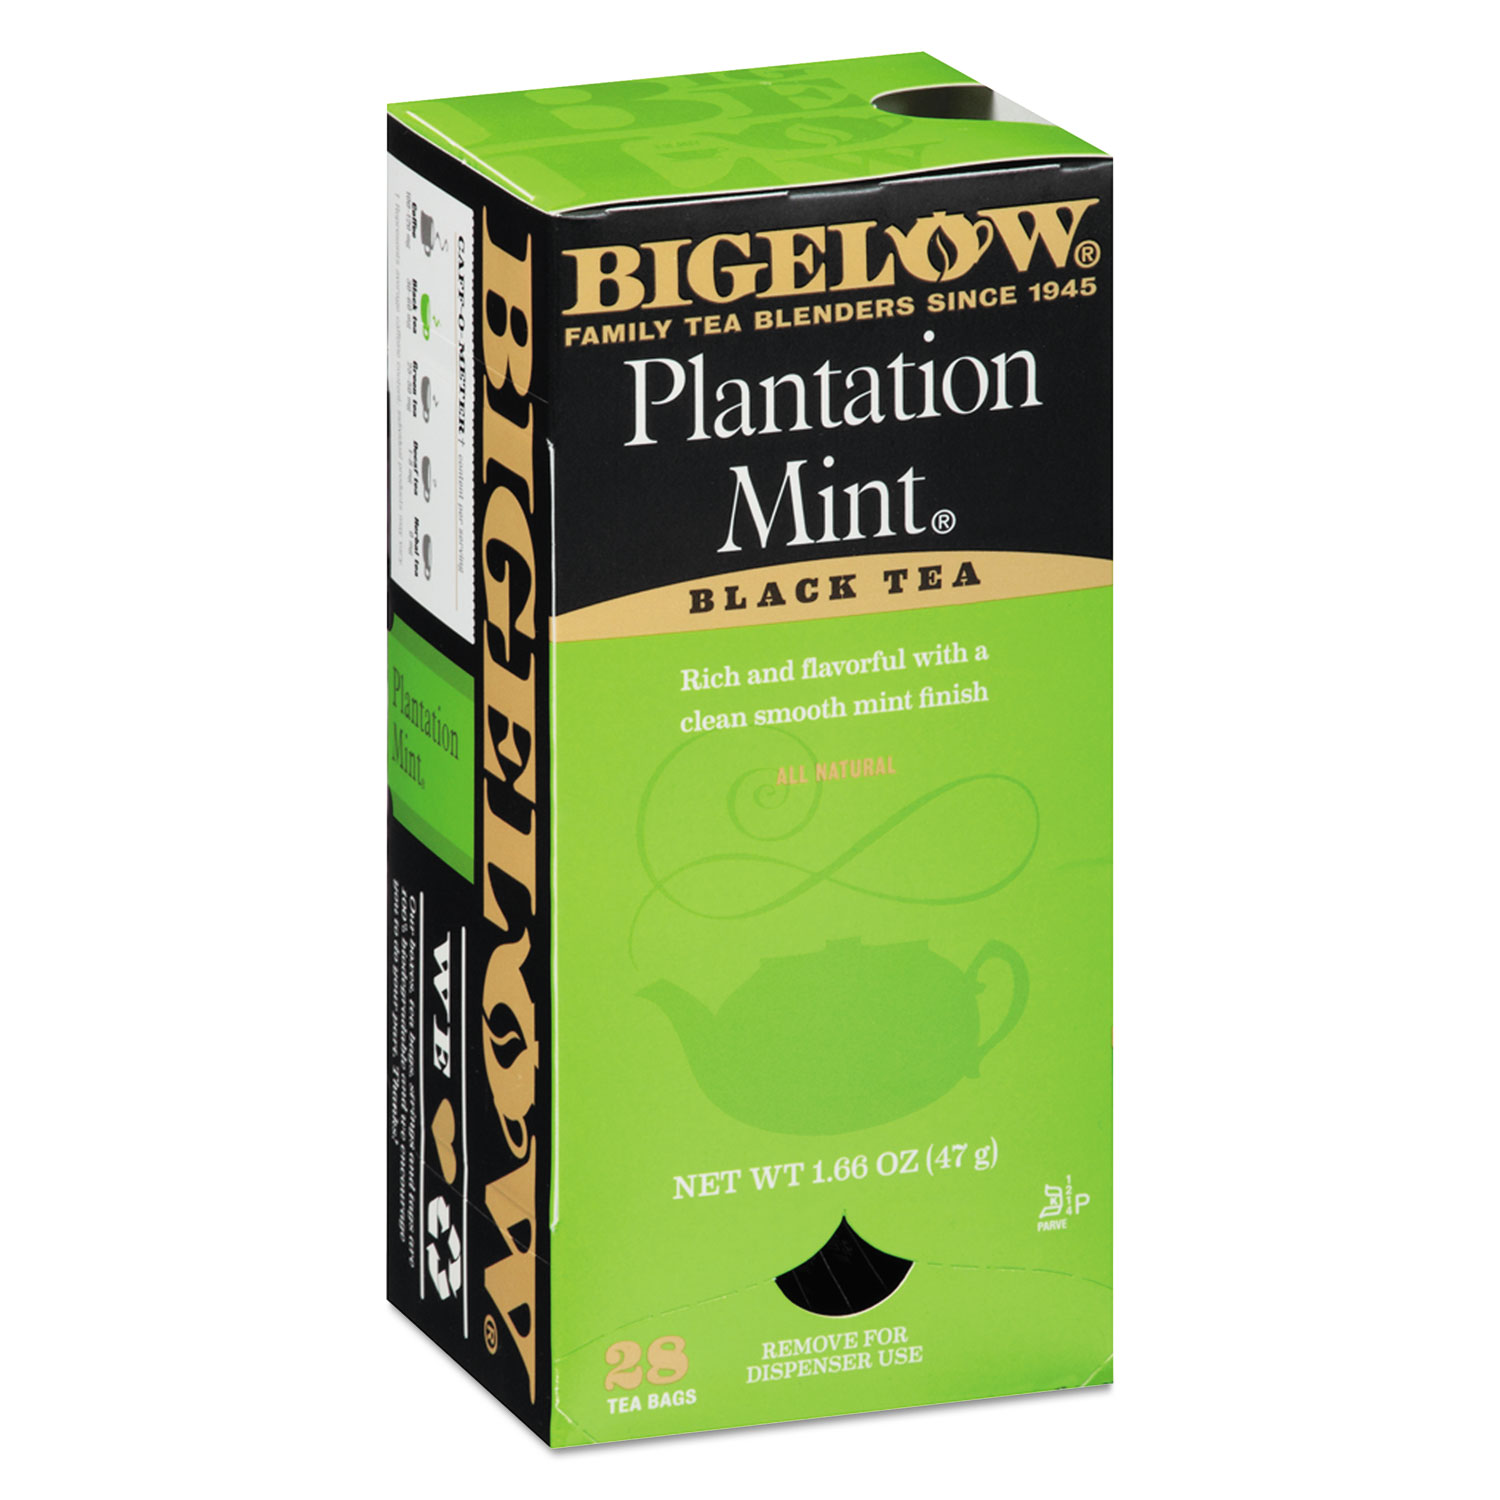 Plantation Mint Black Tea, 28/Box